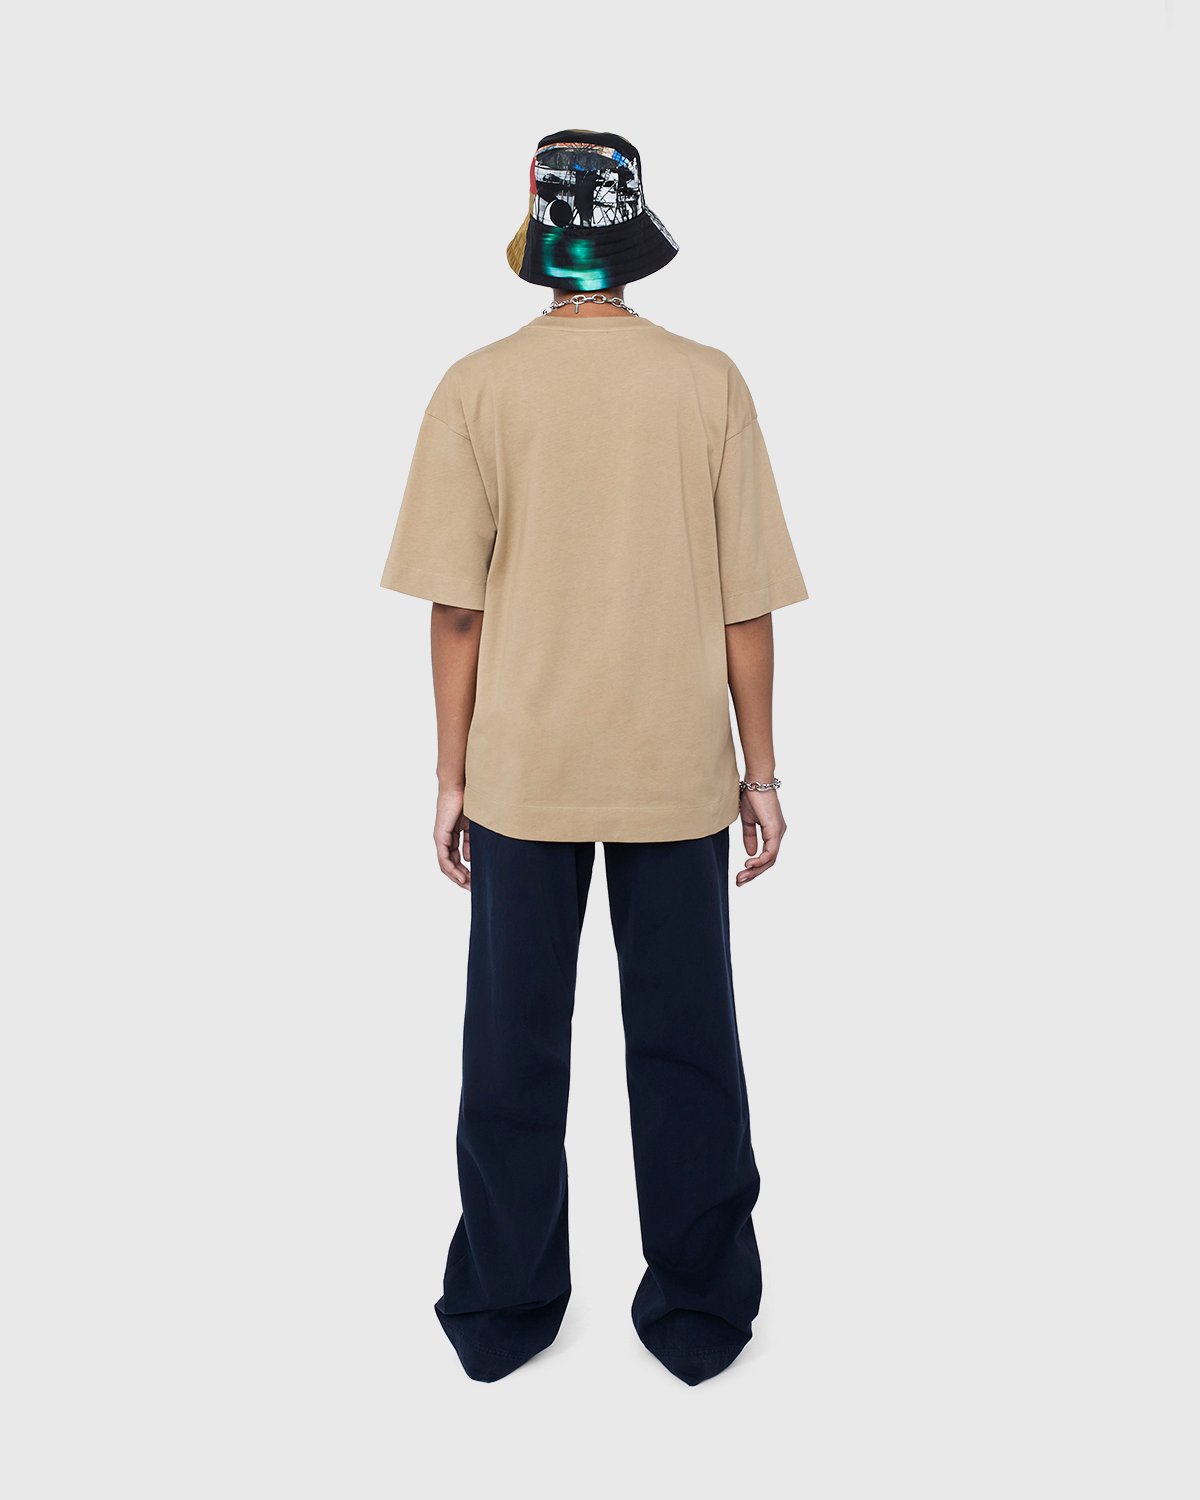 Dries van Noten - Heli Graphic T-Shirt Sand - Clothing - Beige - Image 6